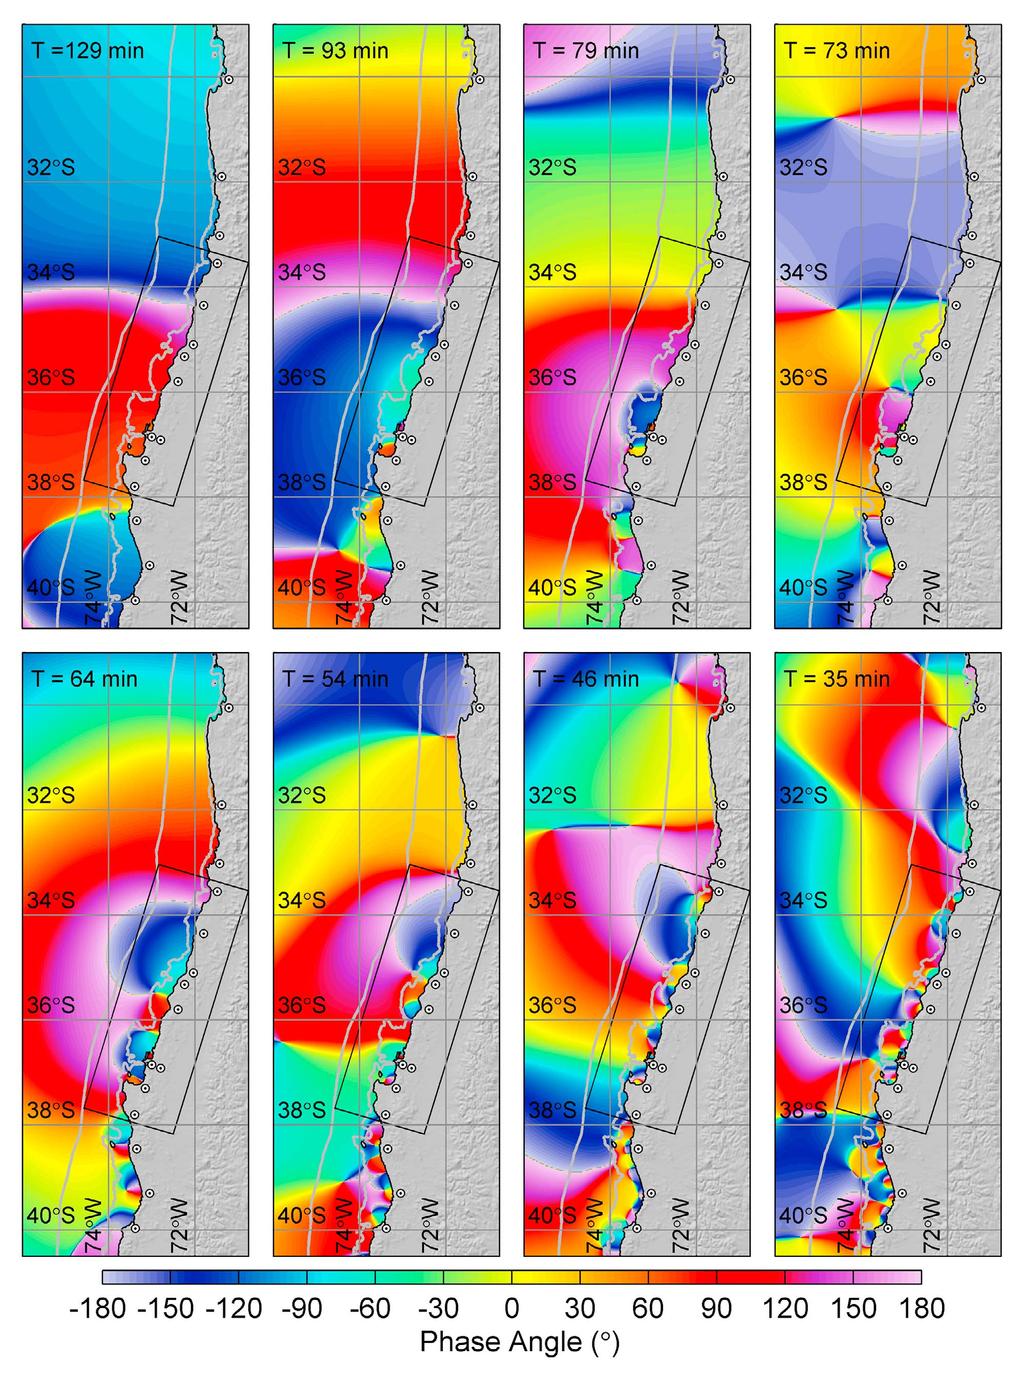 Figure 4. Phase angle of resonance oscillations along Chile coast.